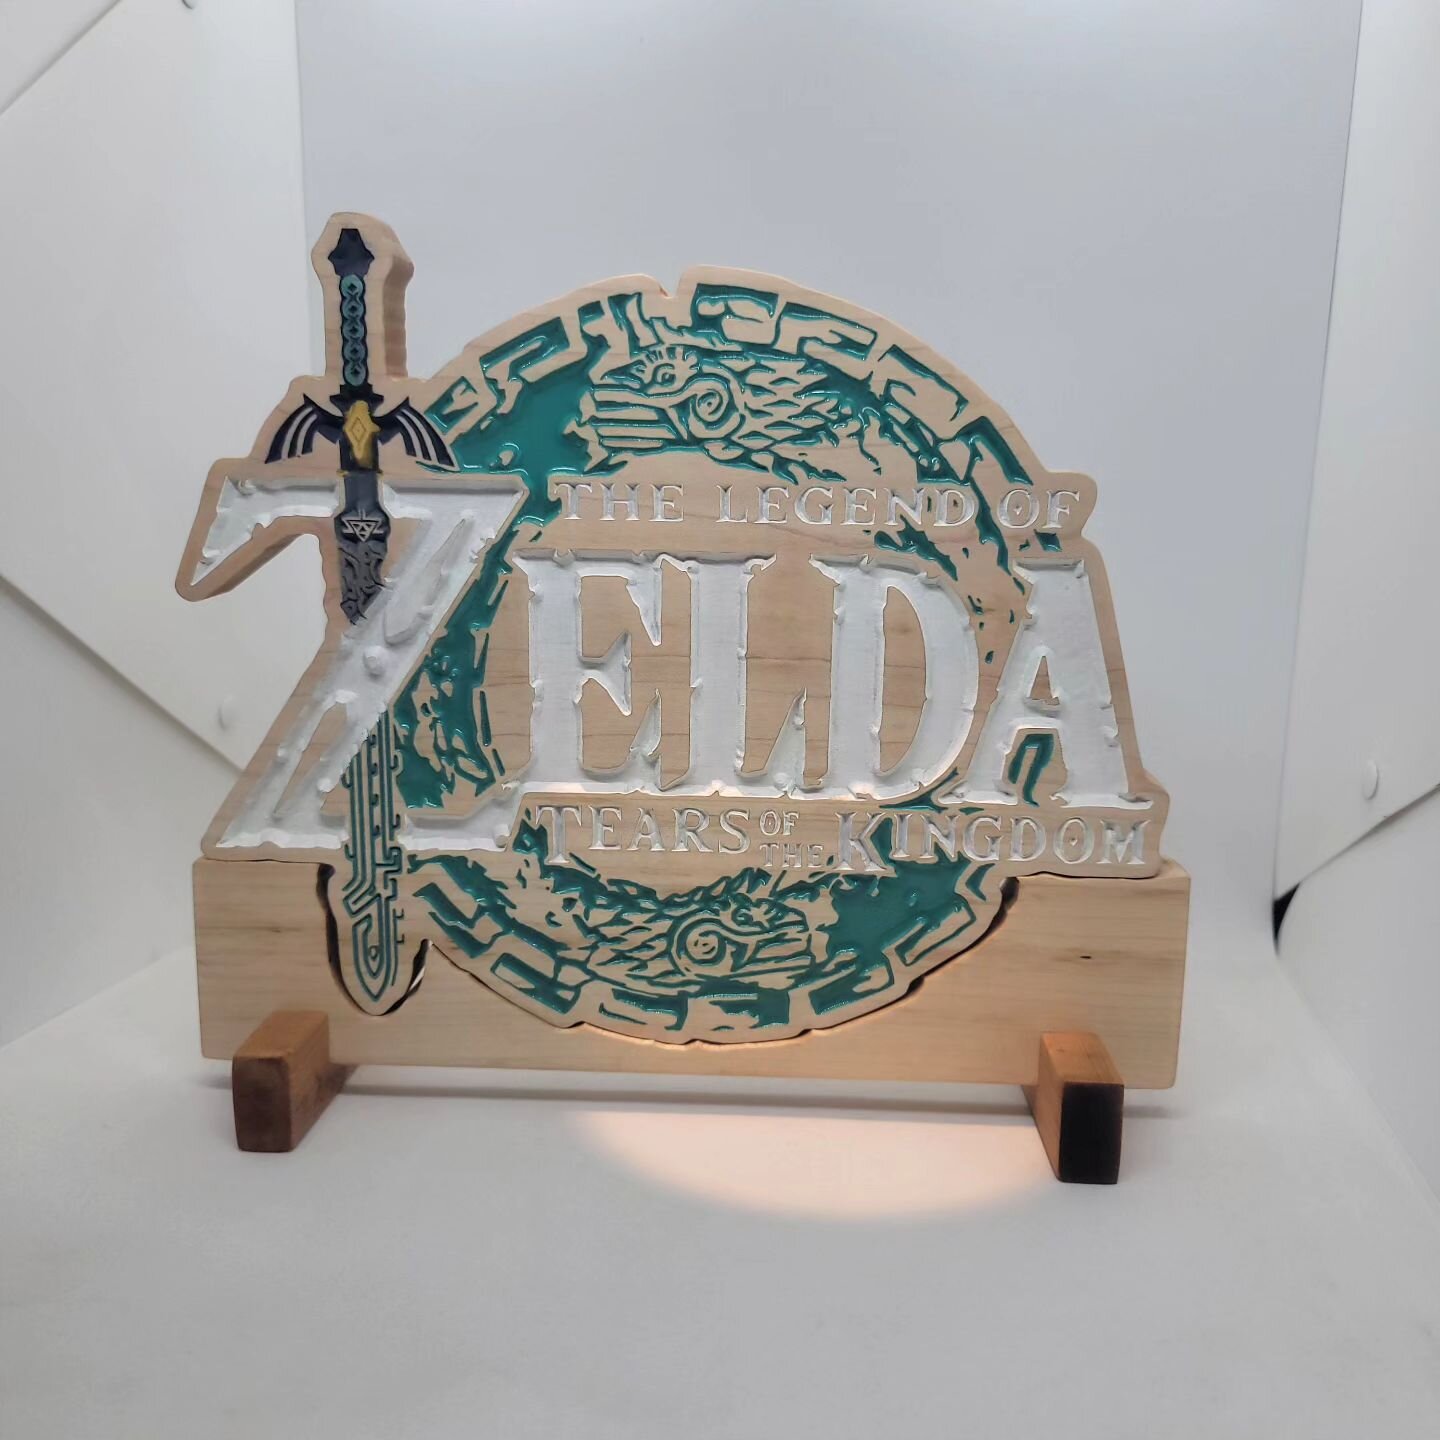 Made a stand for this sweet Zelda carving! 
&bull;
&bull;
&bull;
&bull;
&bull;
#carpentry #custommade #custom #customsign #sign #zelda #tearsofthekingdom #art #new #hardwood #woodart #carving #smallshop #gaming #nintendo